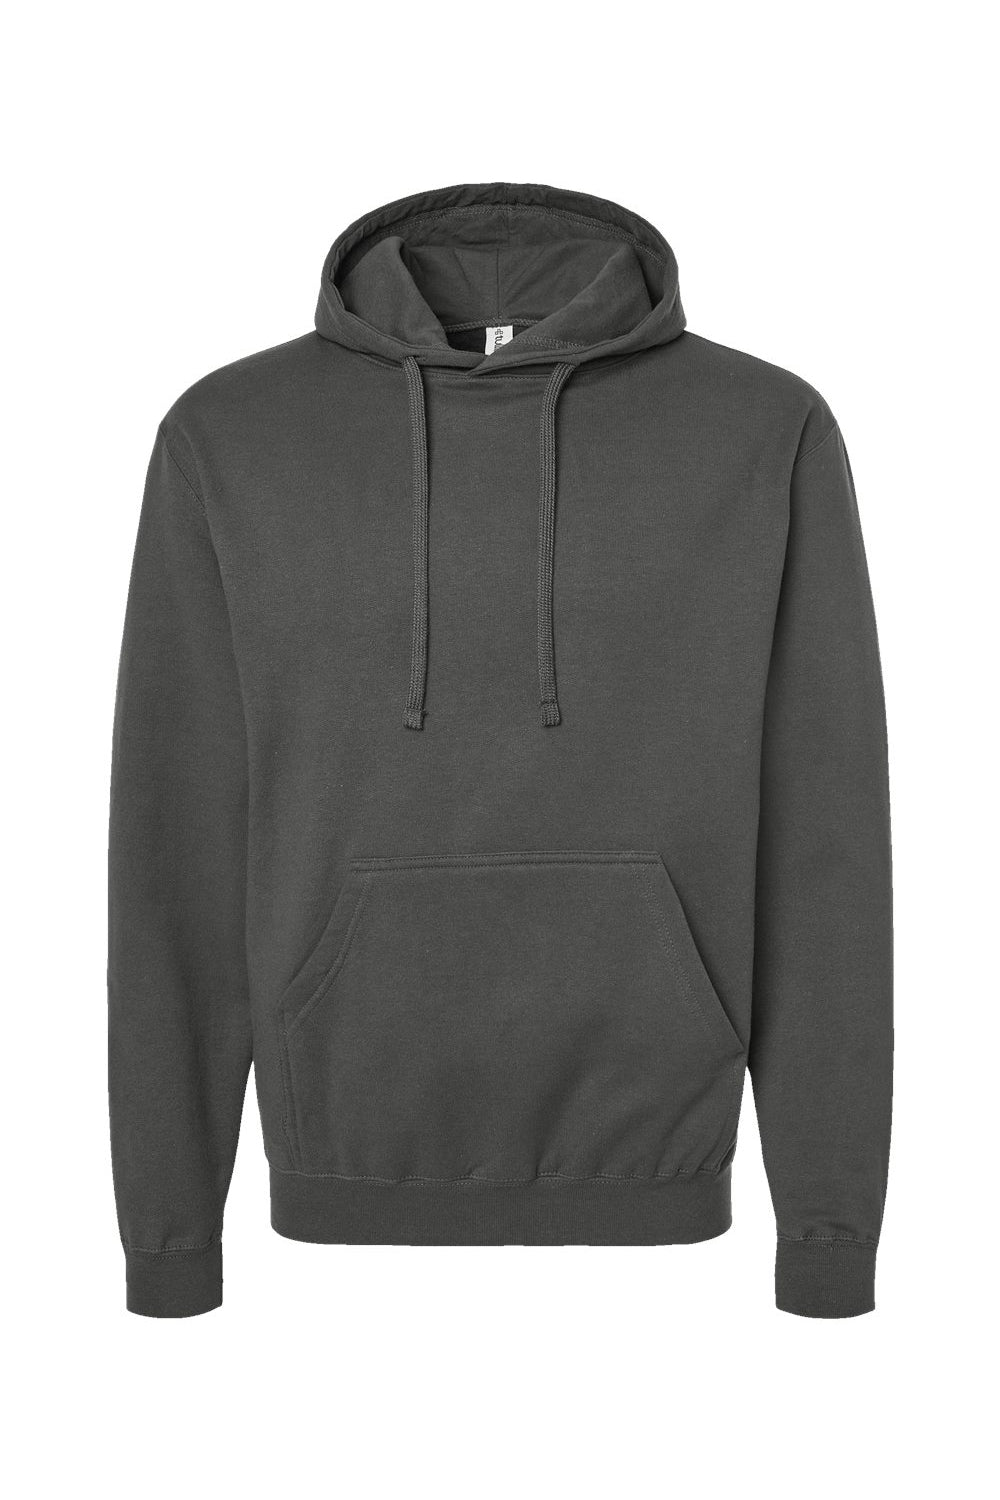 Tultex 320 Mens Fleece Hooded Sweatshirt Hoodie Charcoal Grey Flat Front